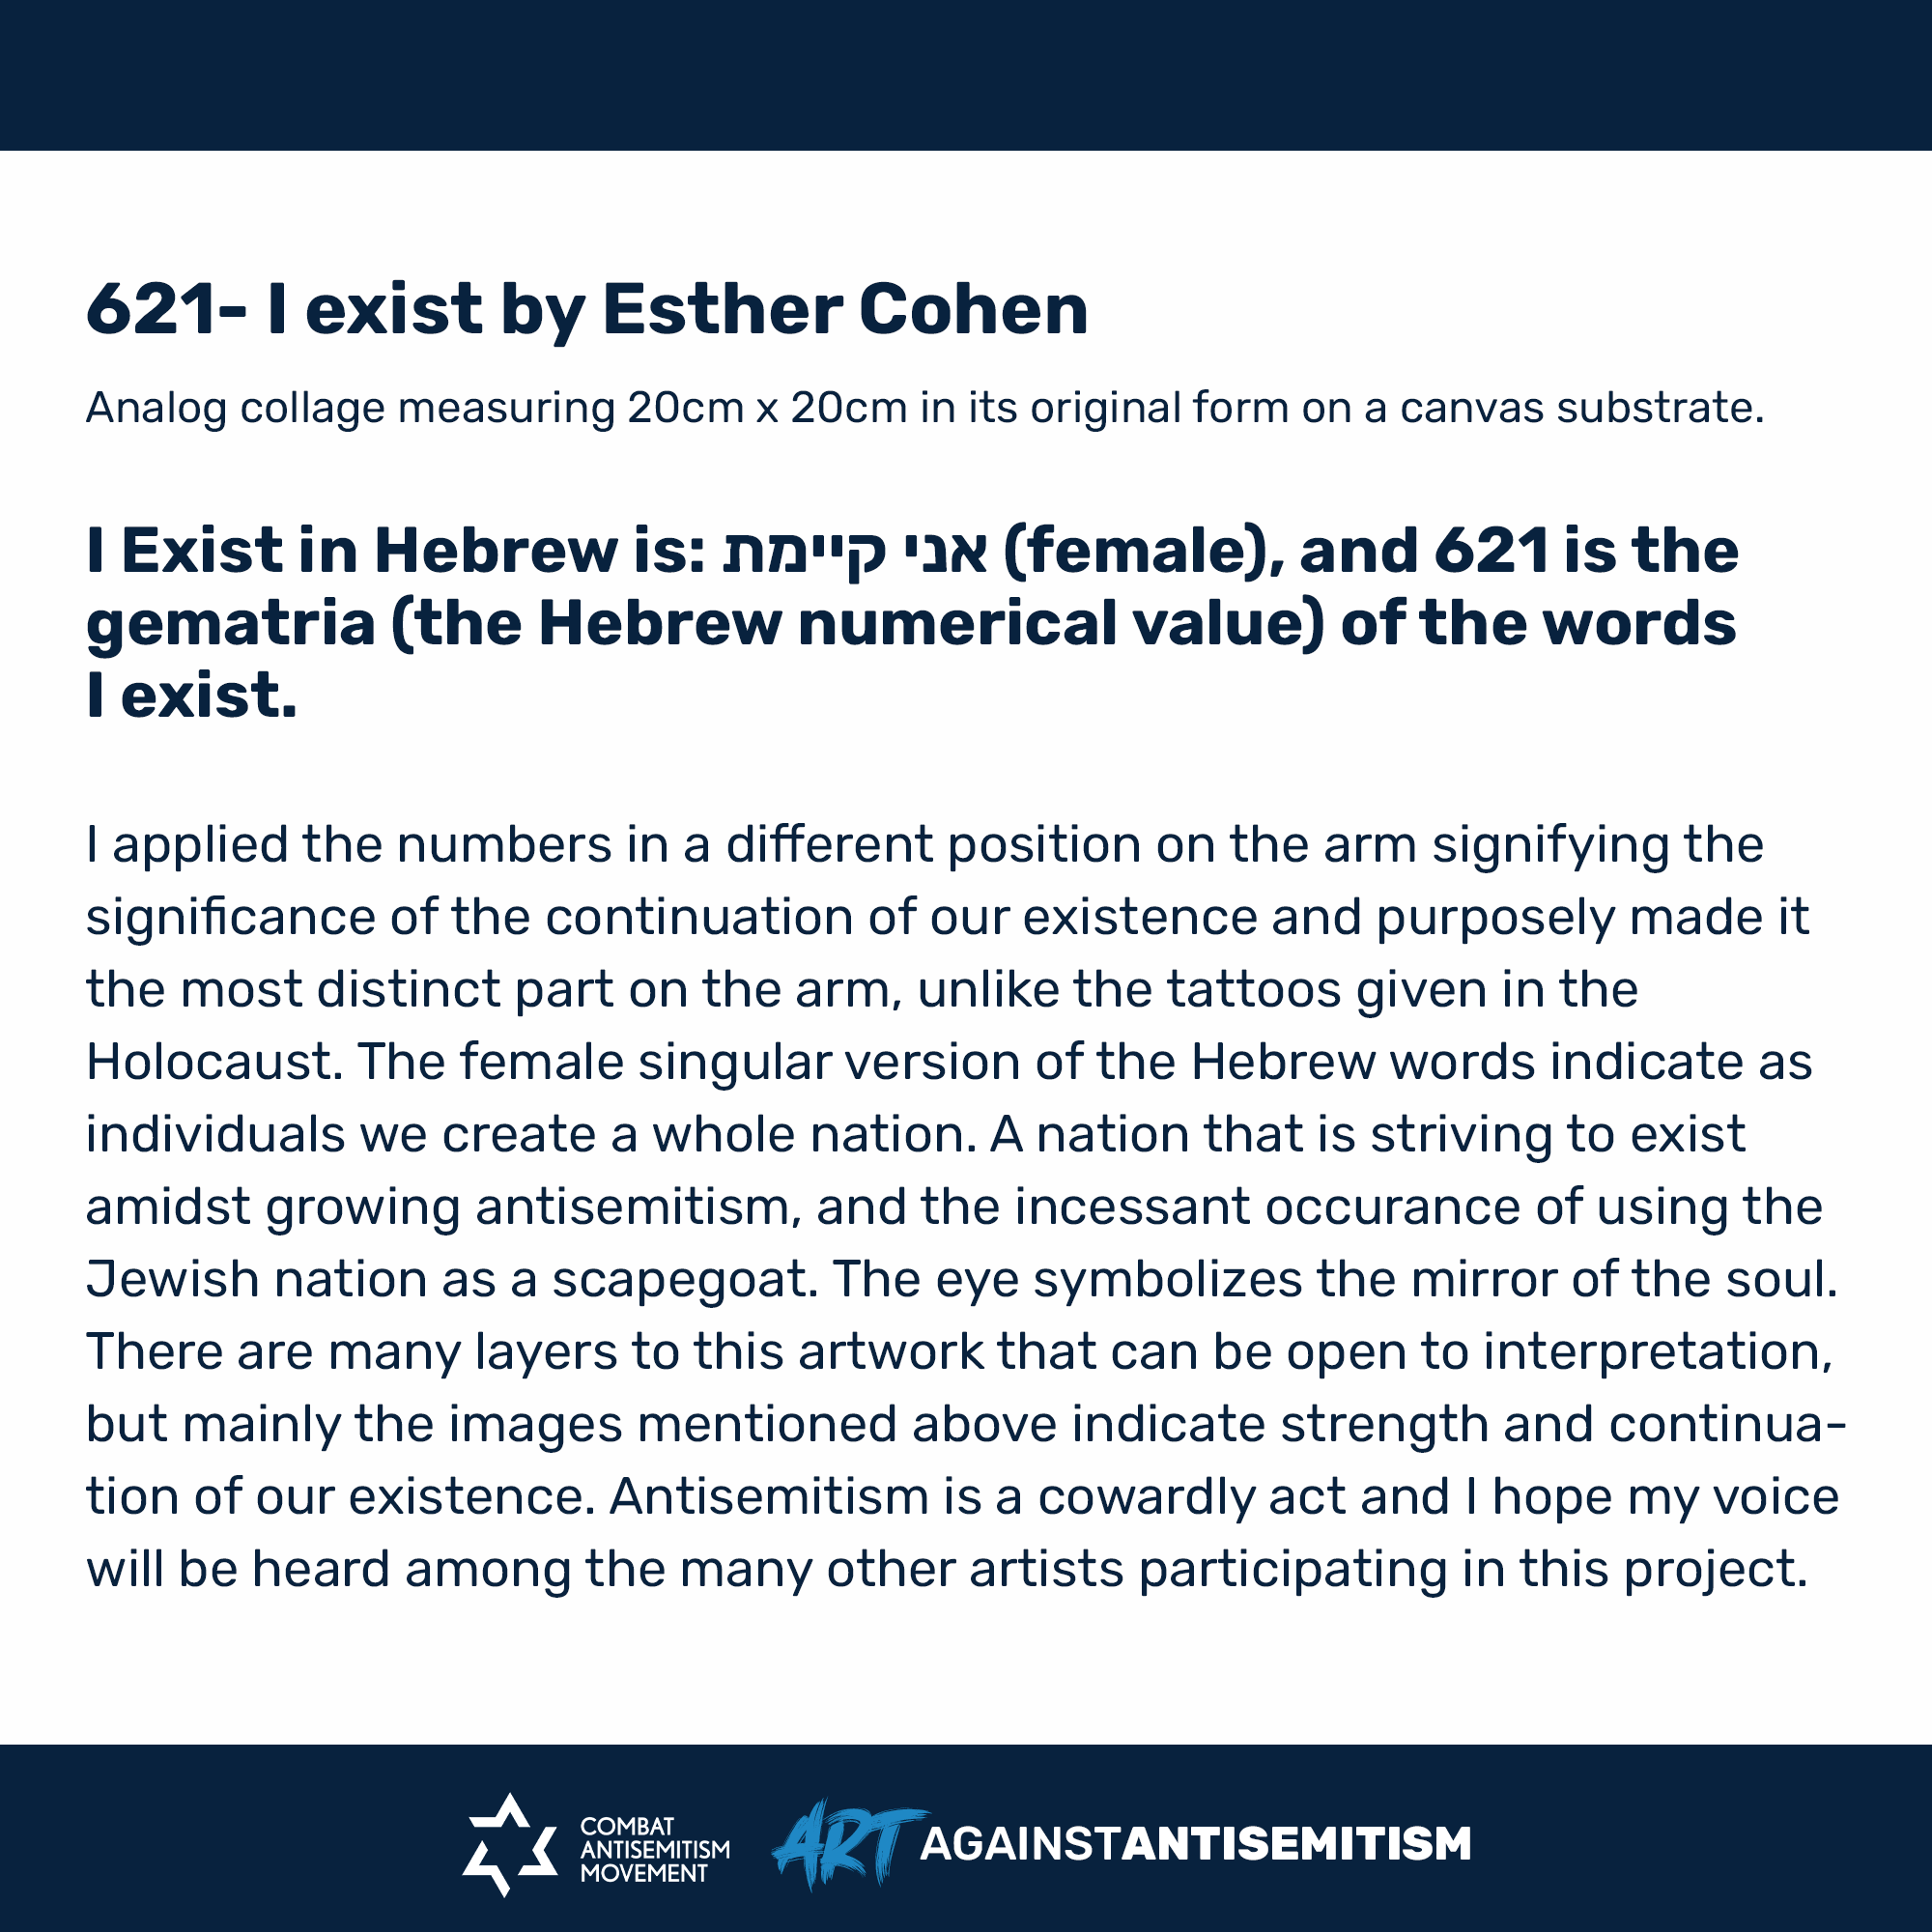 Art Against Antisemitism Posts (Esther-3, V2)